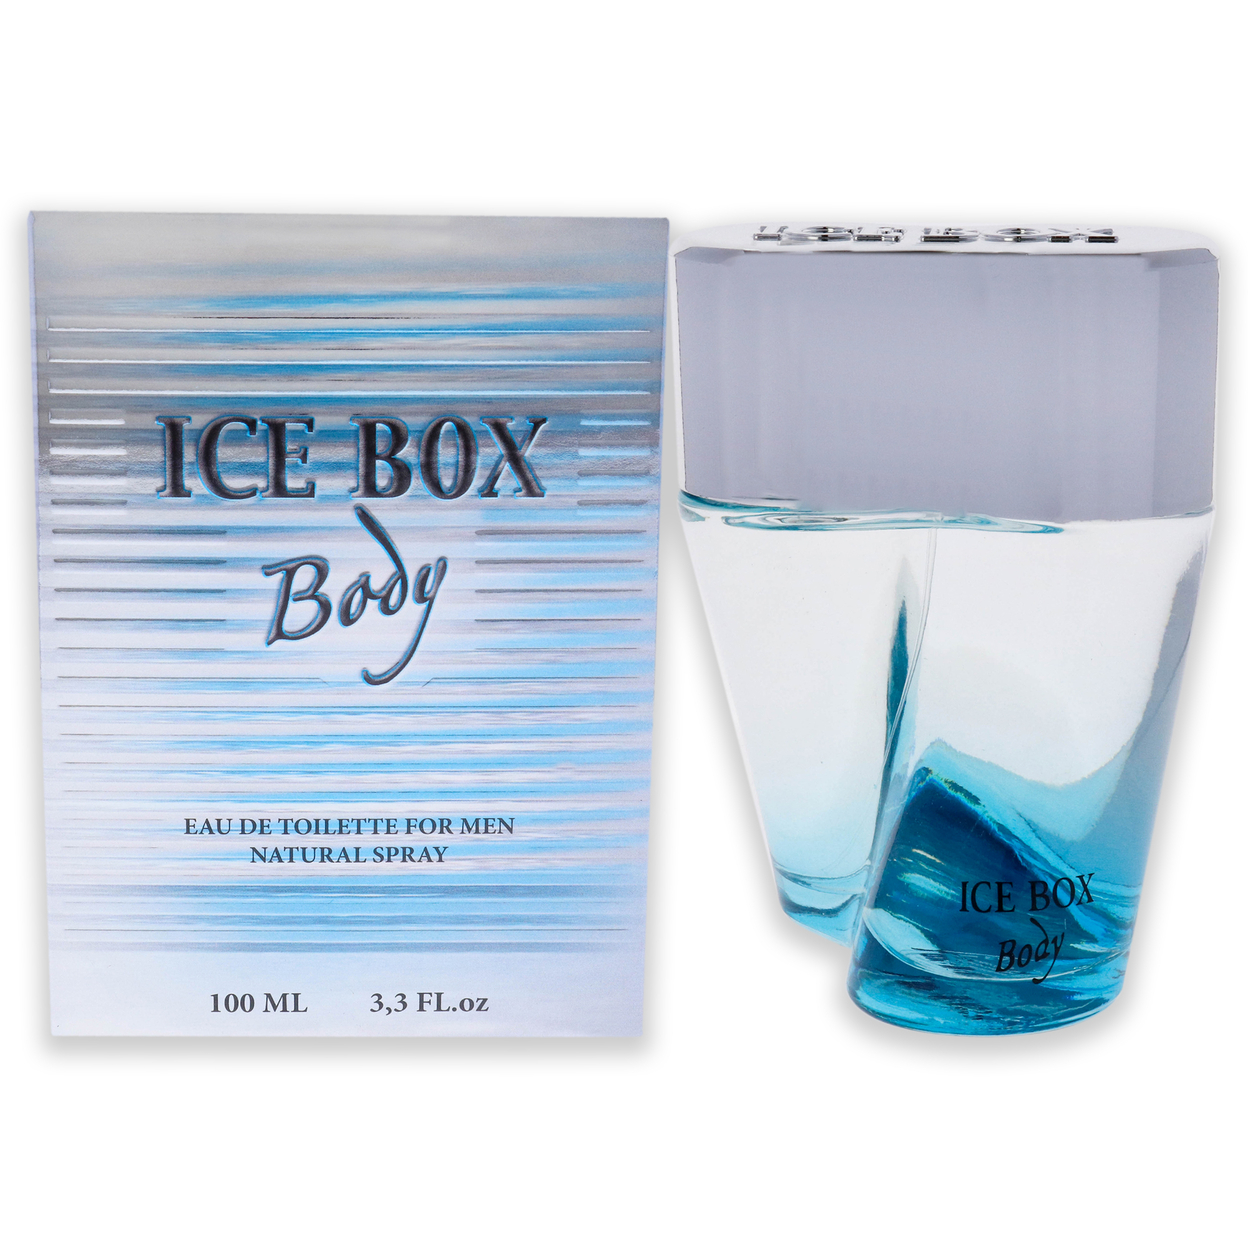 New Brand Ice Box Body EDT Spray 3.3 Oz